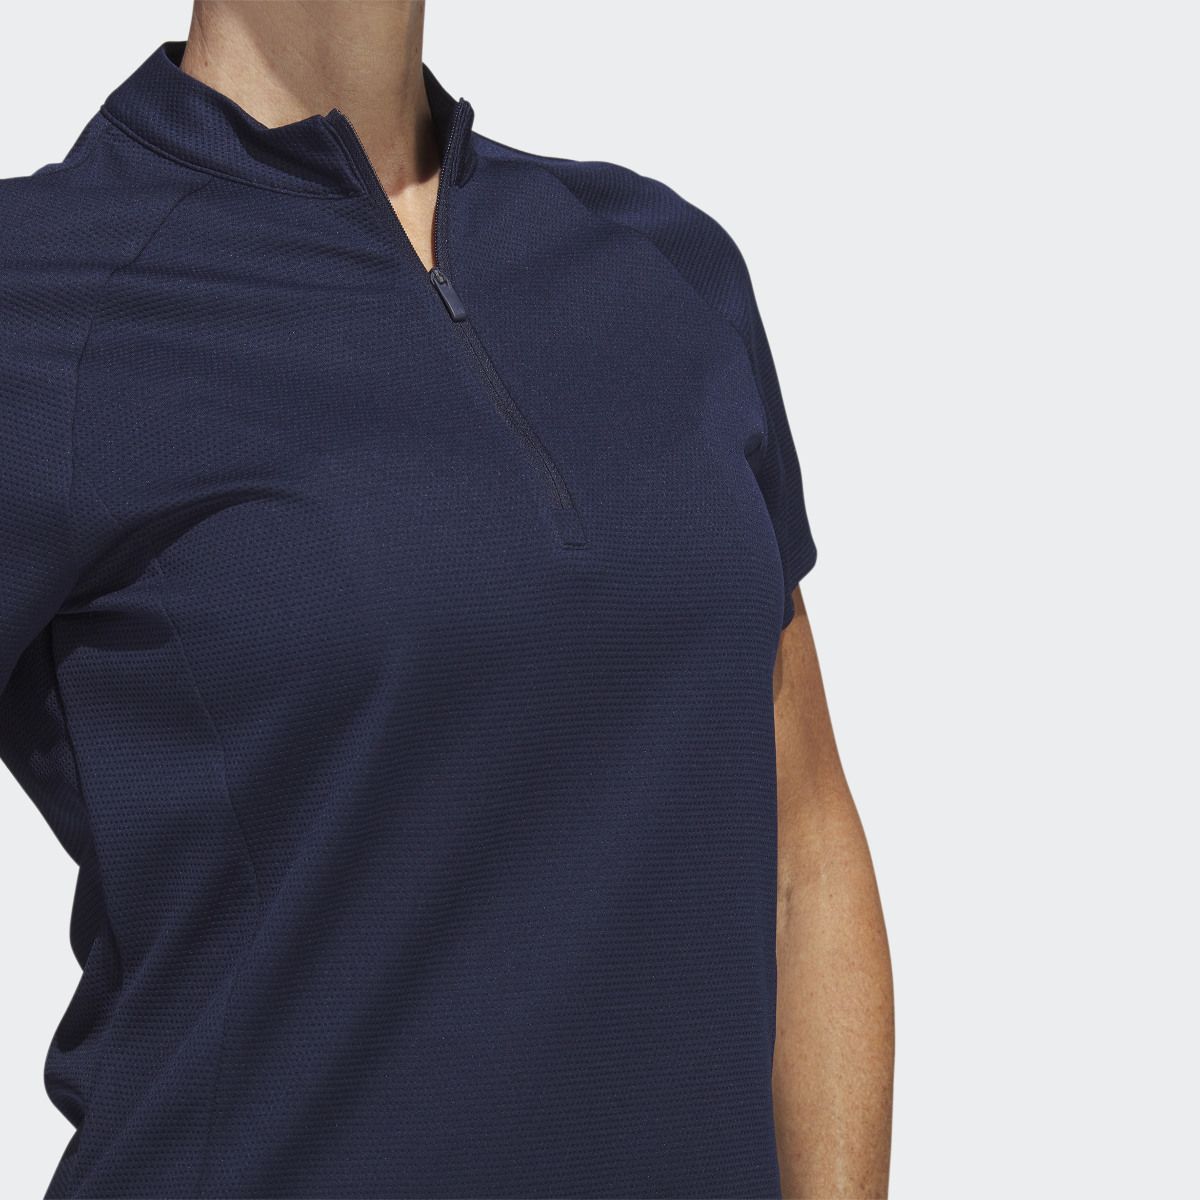 Adidas Textured Golf Poloshirt. 6